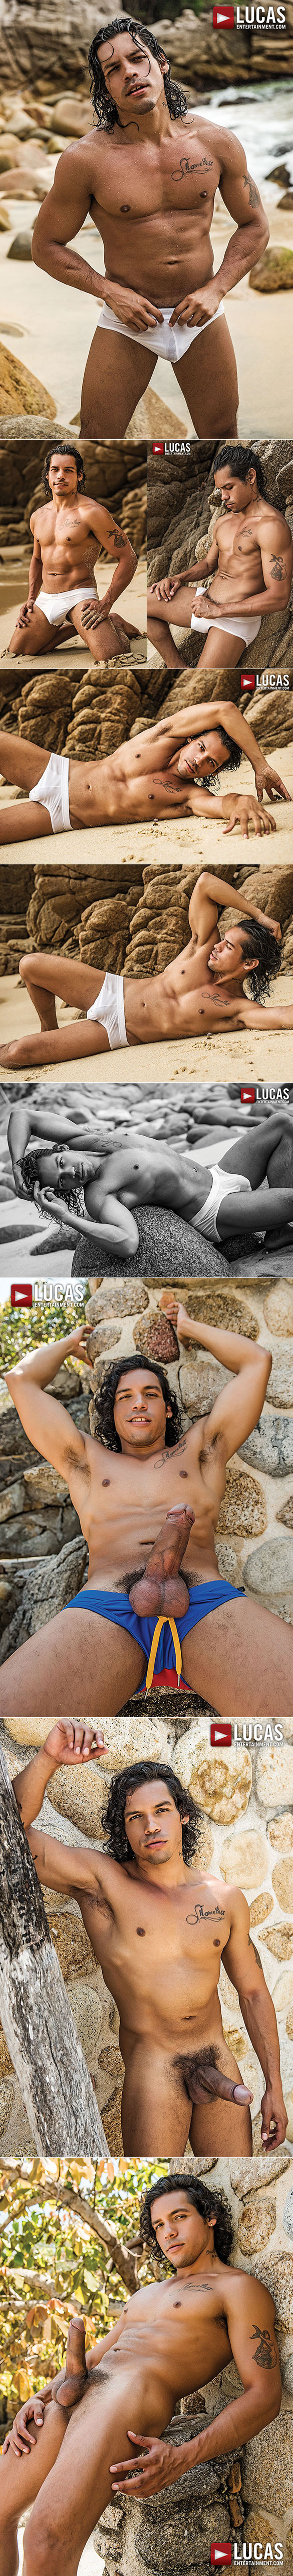 Lucas Entertainment: Alejandro Castillo pounds Stephen Harte's hairy ass raw in "Greedy Holes"